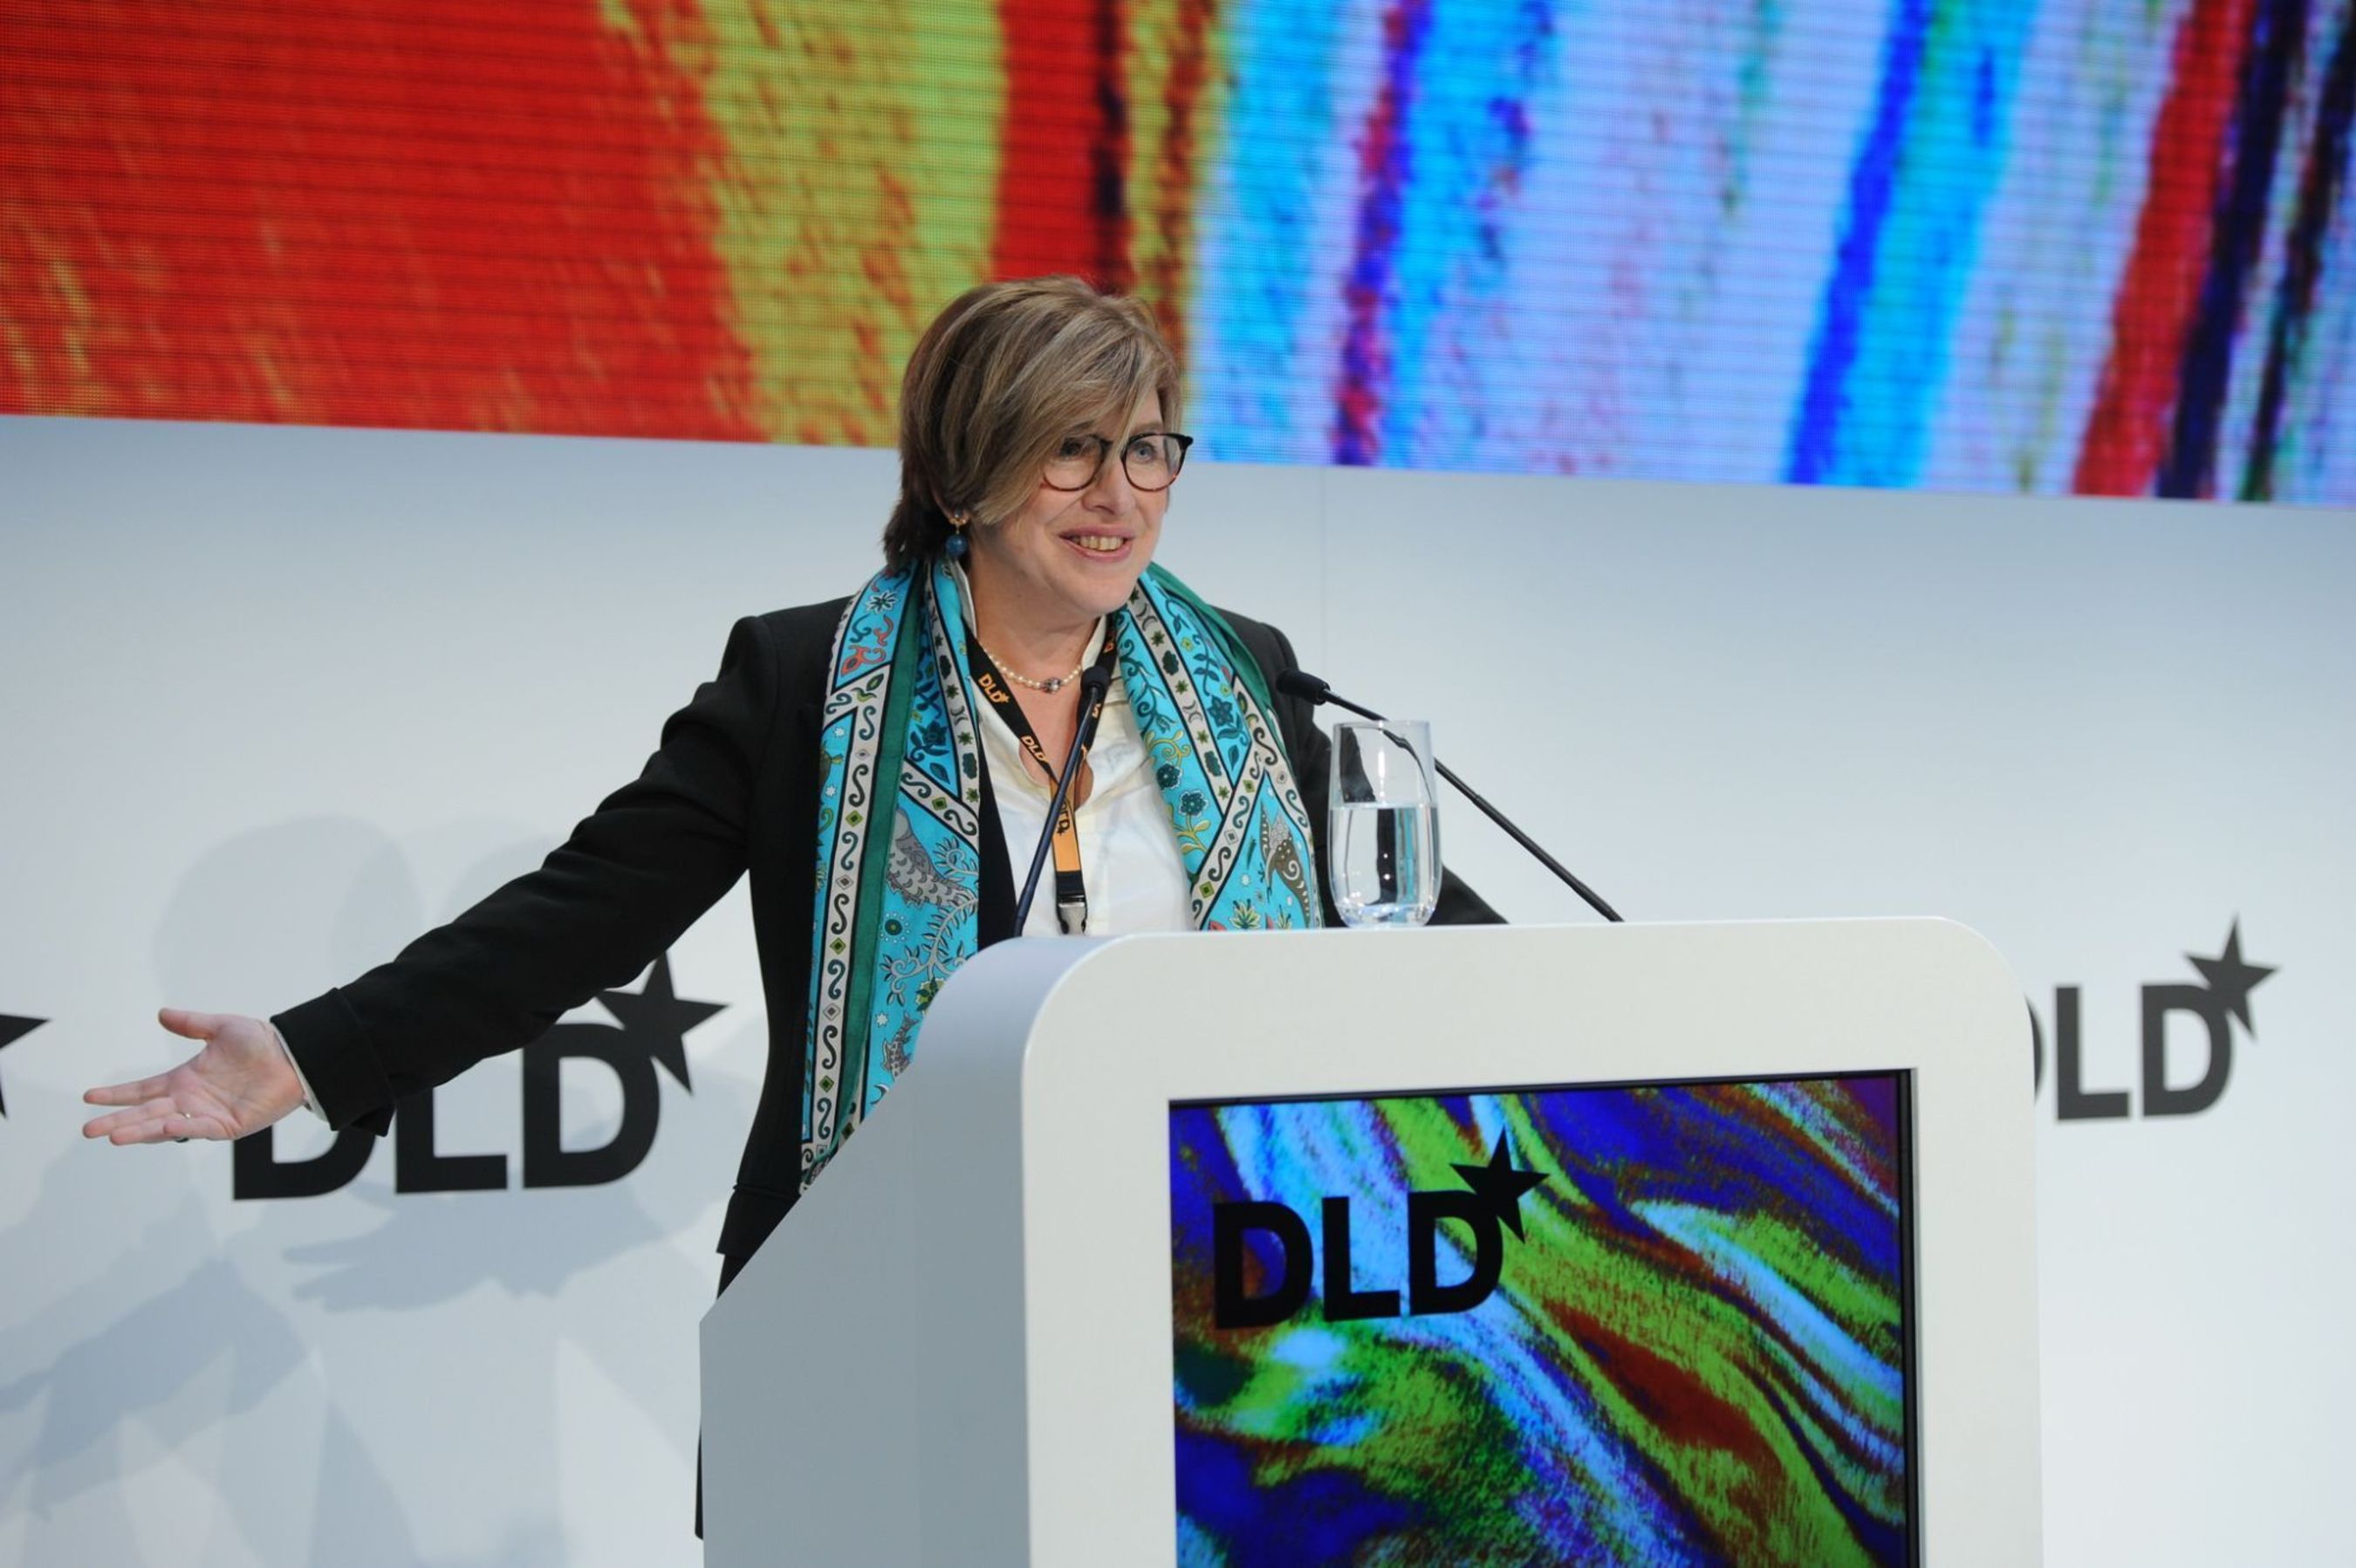 DLD founder Steffi Czerny during her opening speech at the 11th DLD conference in Munich. (PRNewsFoto/Hubert Burda Media)